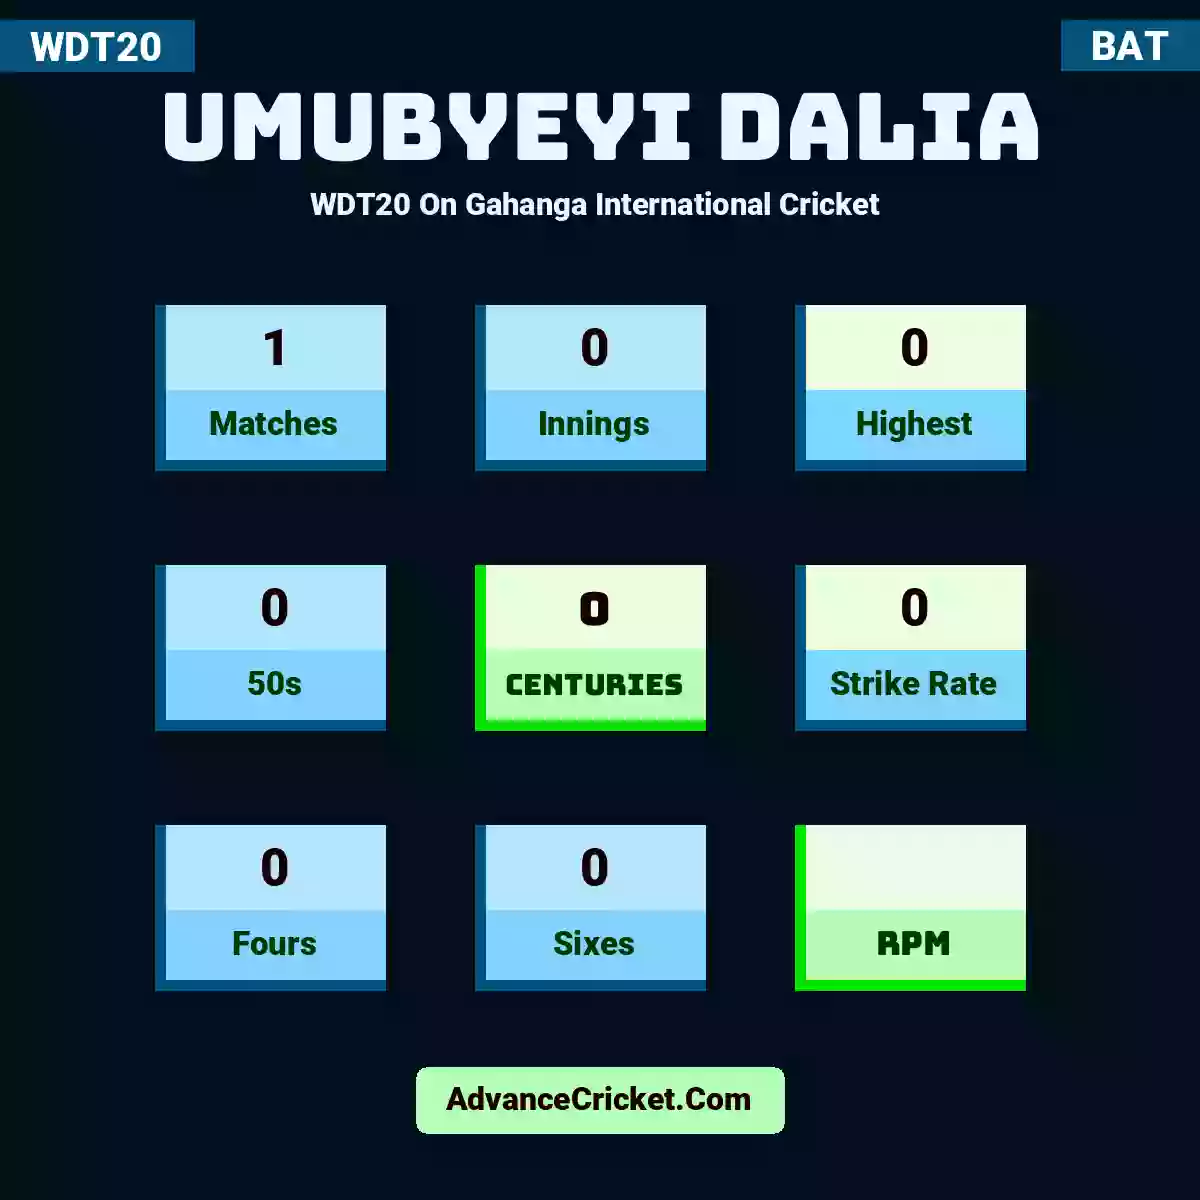 Umubyeyi Dalia WDT20  On Gahanga International Cricket , Umubyeyi Dalia played 1 matches, scored 0 runs as highest, 0 half-centuries, and 0 centuries, with a strike rate of 0. U.Dalia hit 0 fours and 0 sixes.